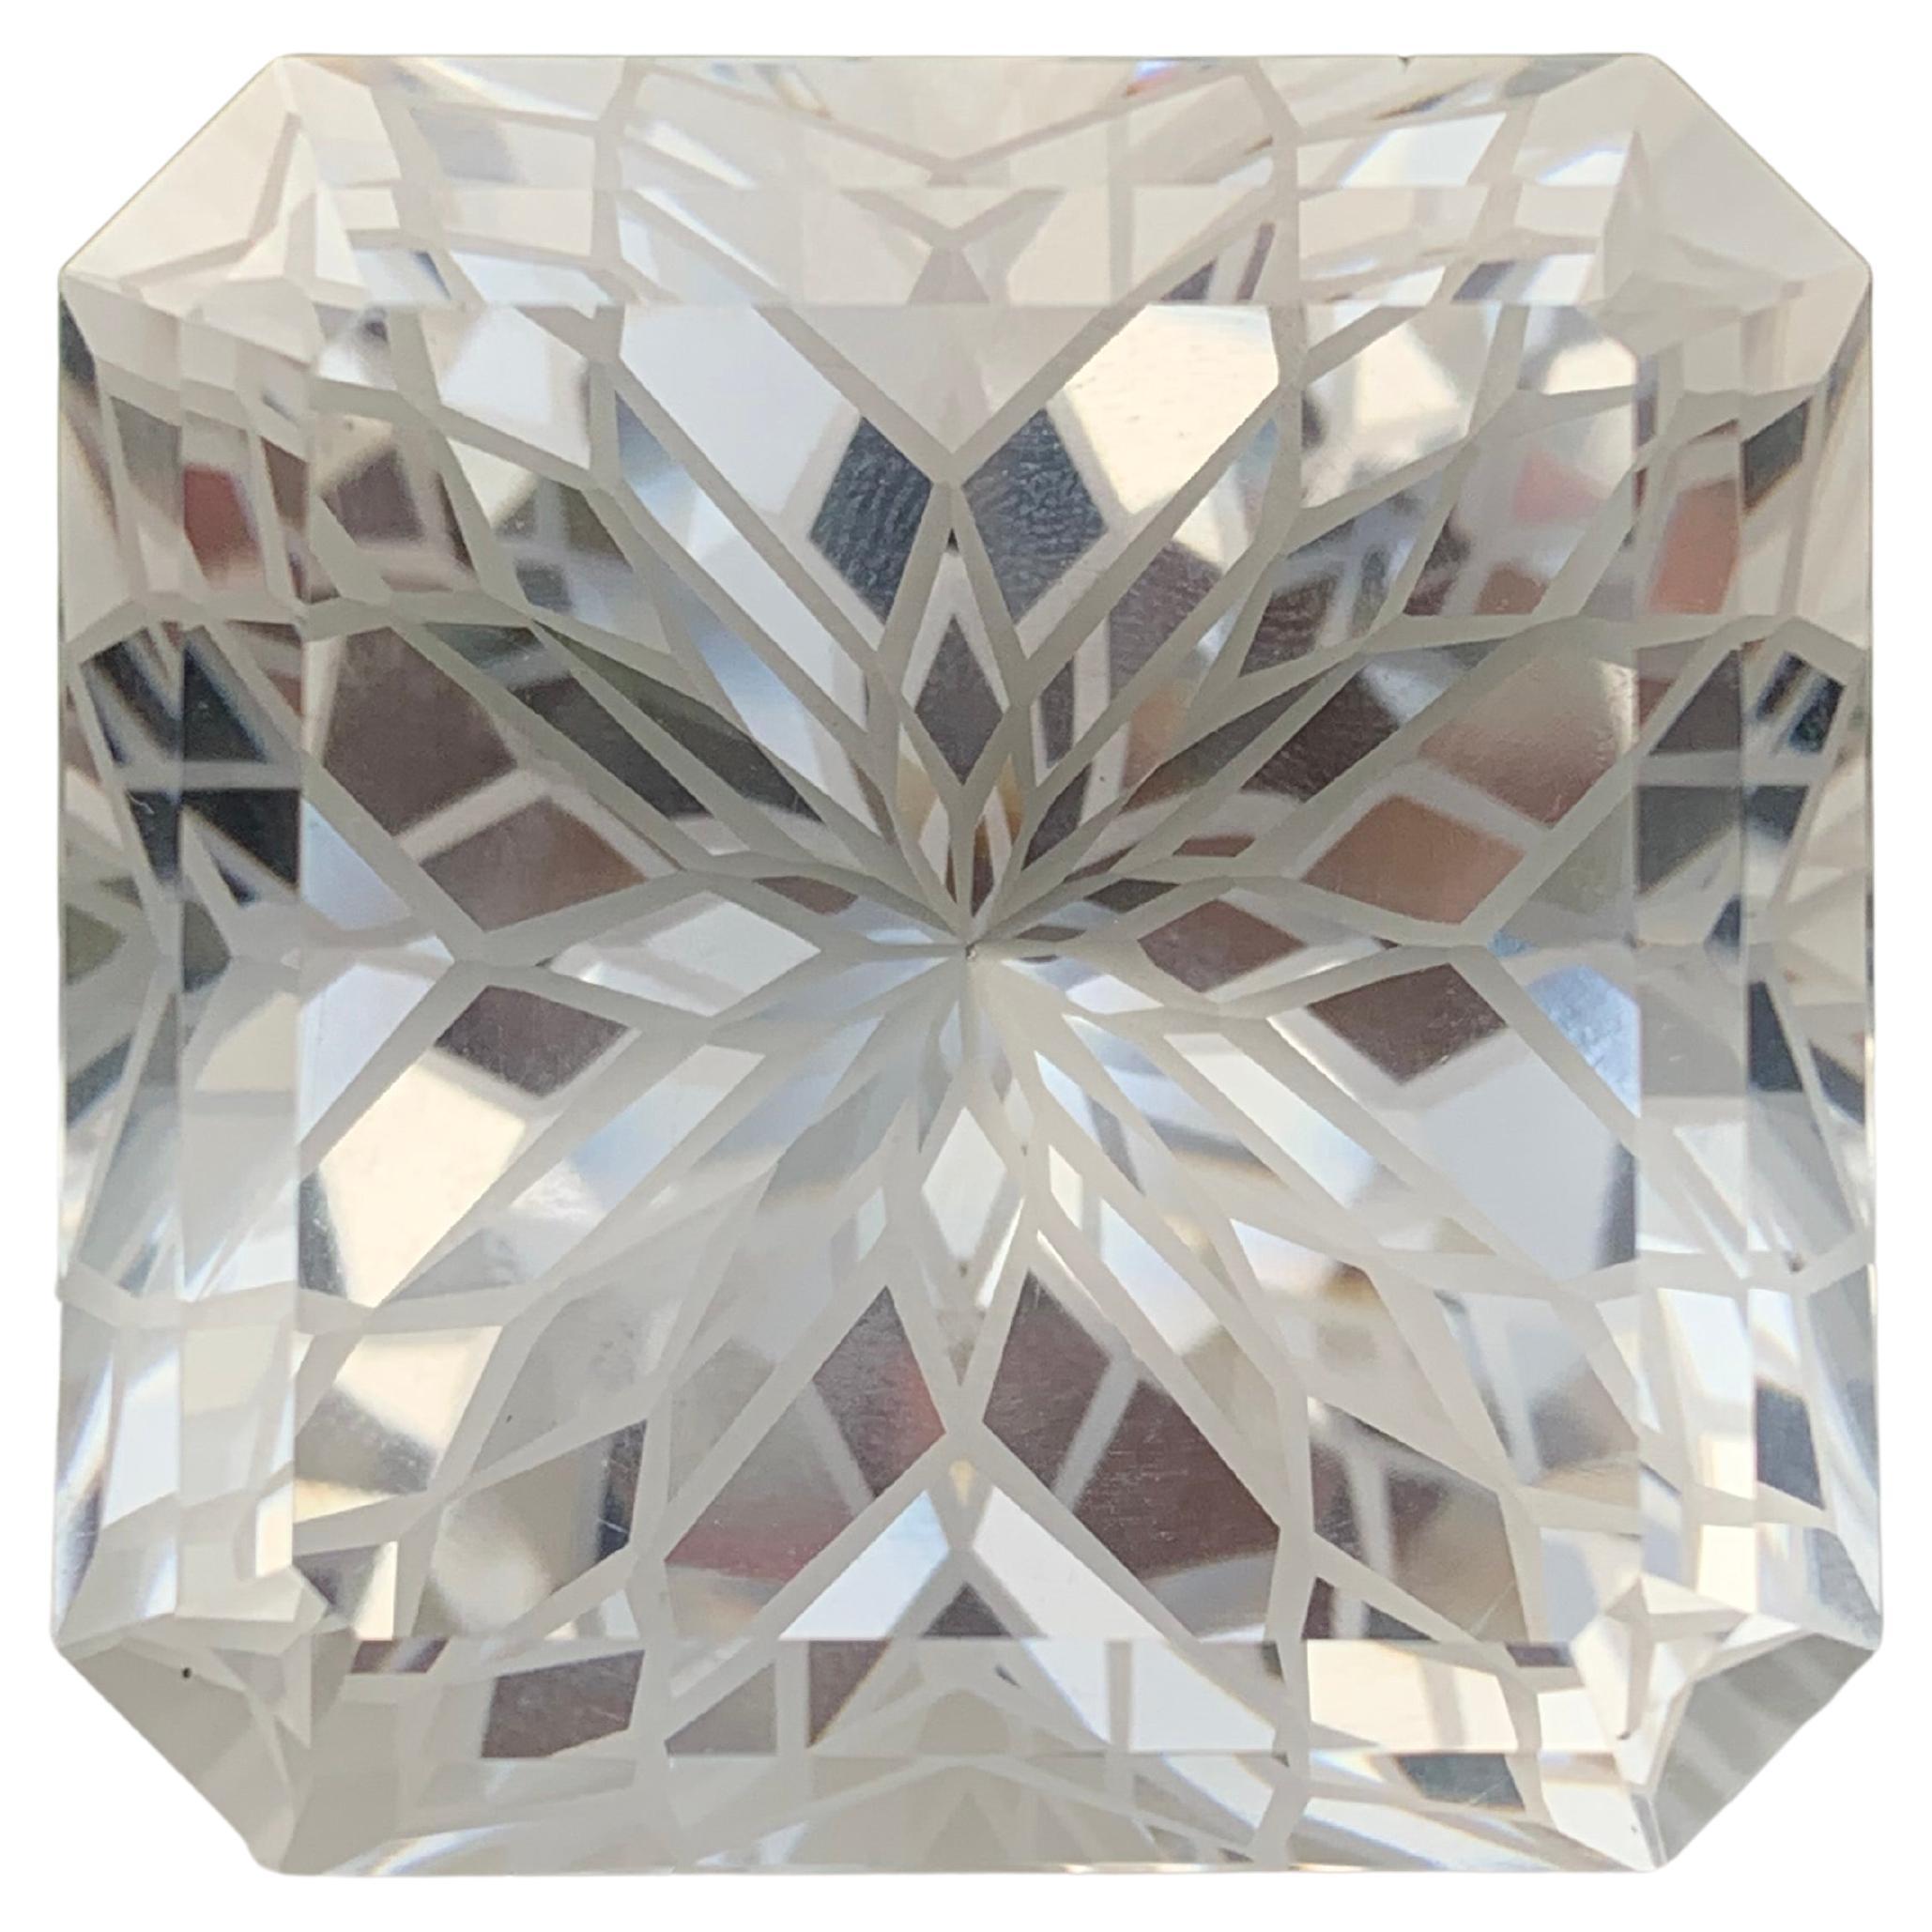 Grand quartz de cristal naturel transparent non serti de 278,95 carats pour la fabrication de bijoux